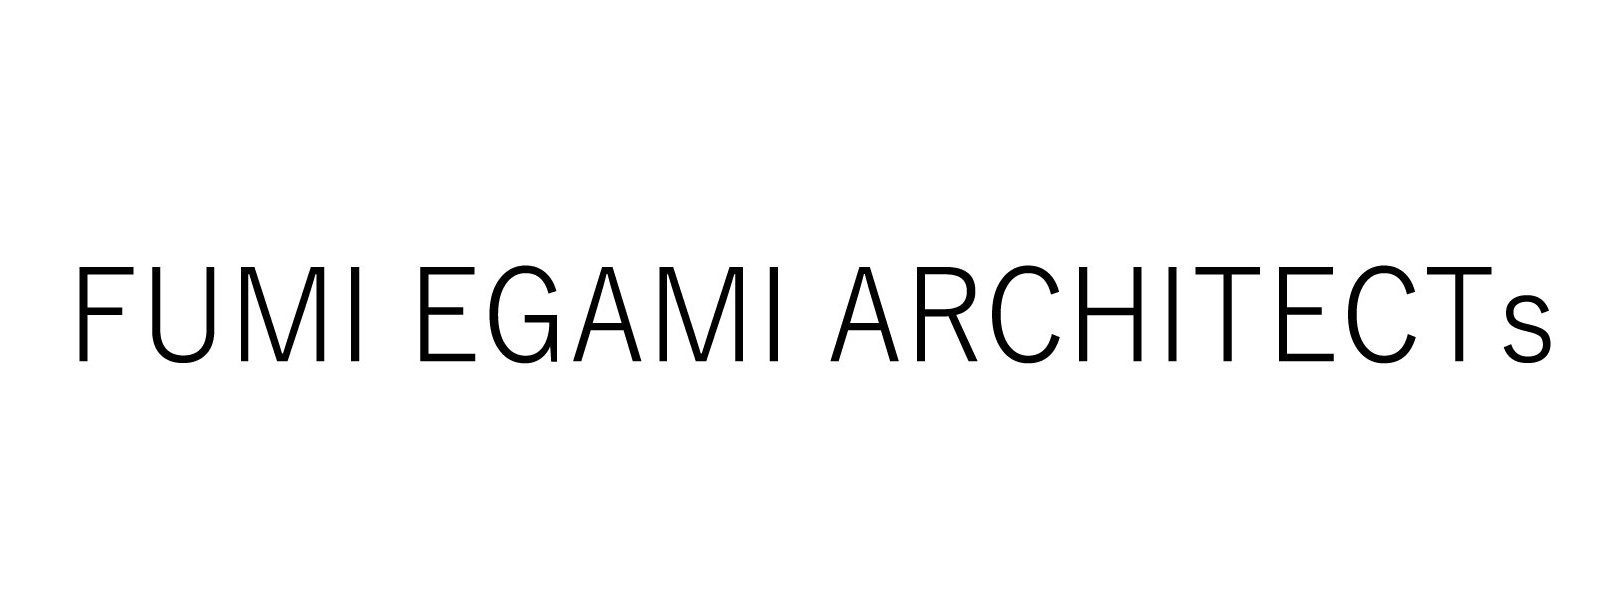 FUMI EGAMI ARCHITECTs